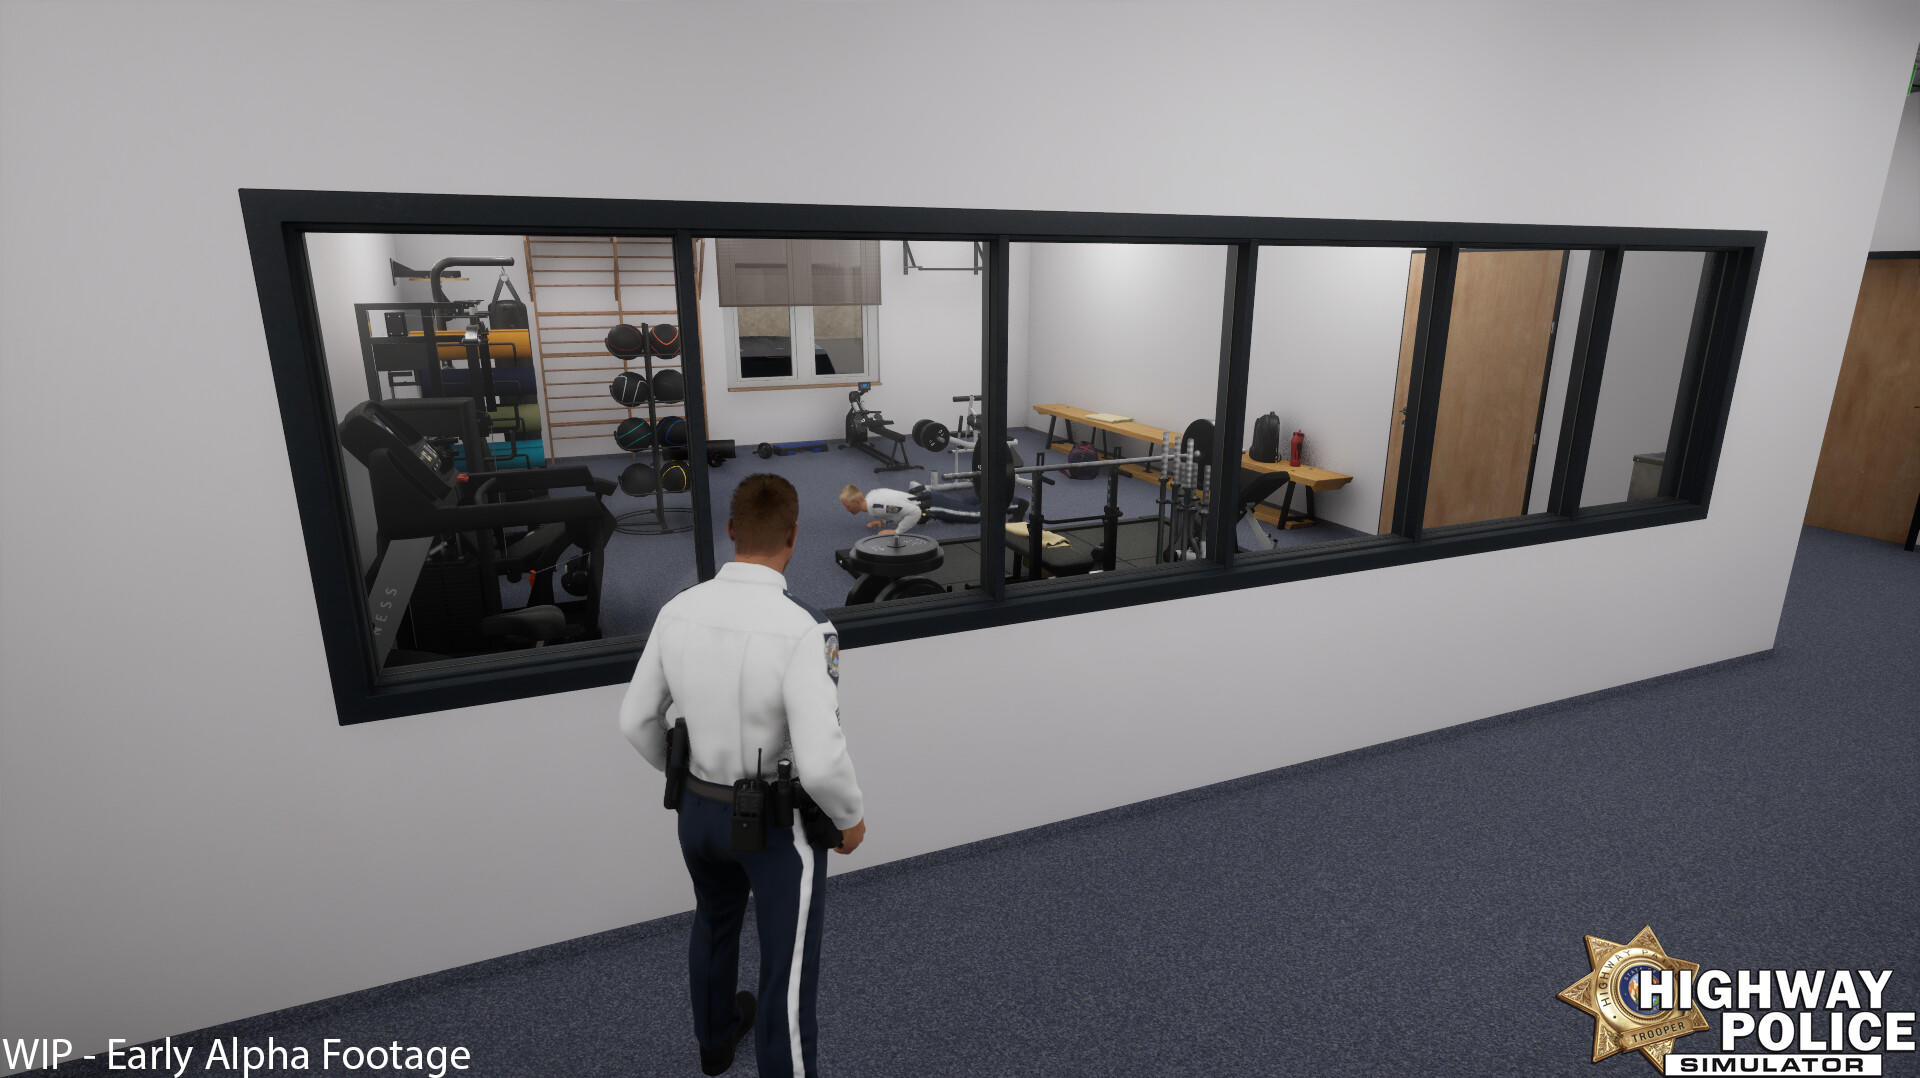 Screenshot of Highway Police Simulator